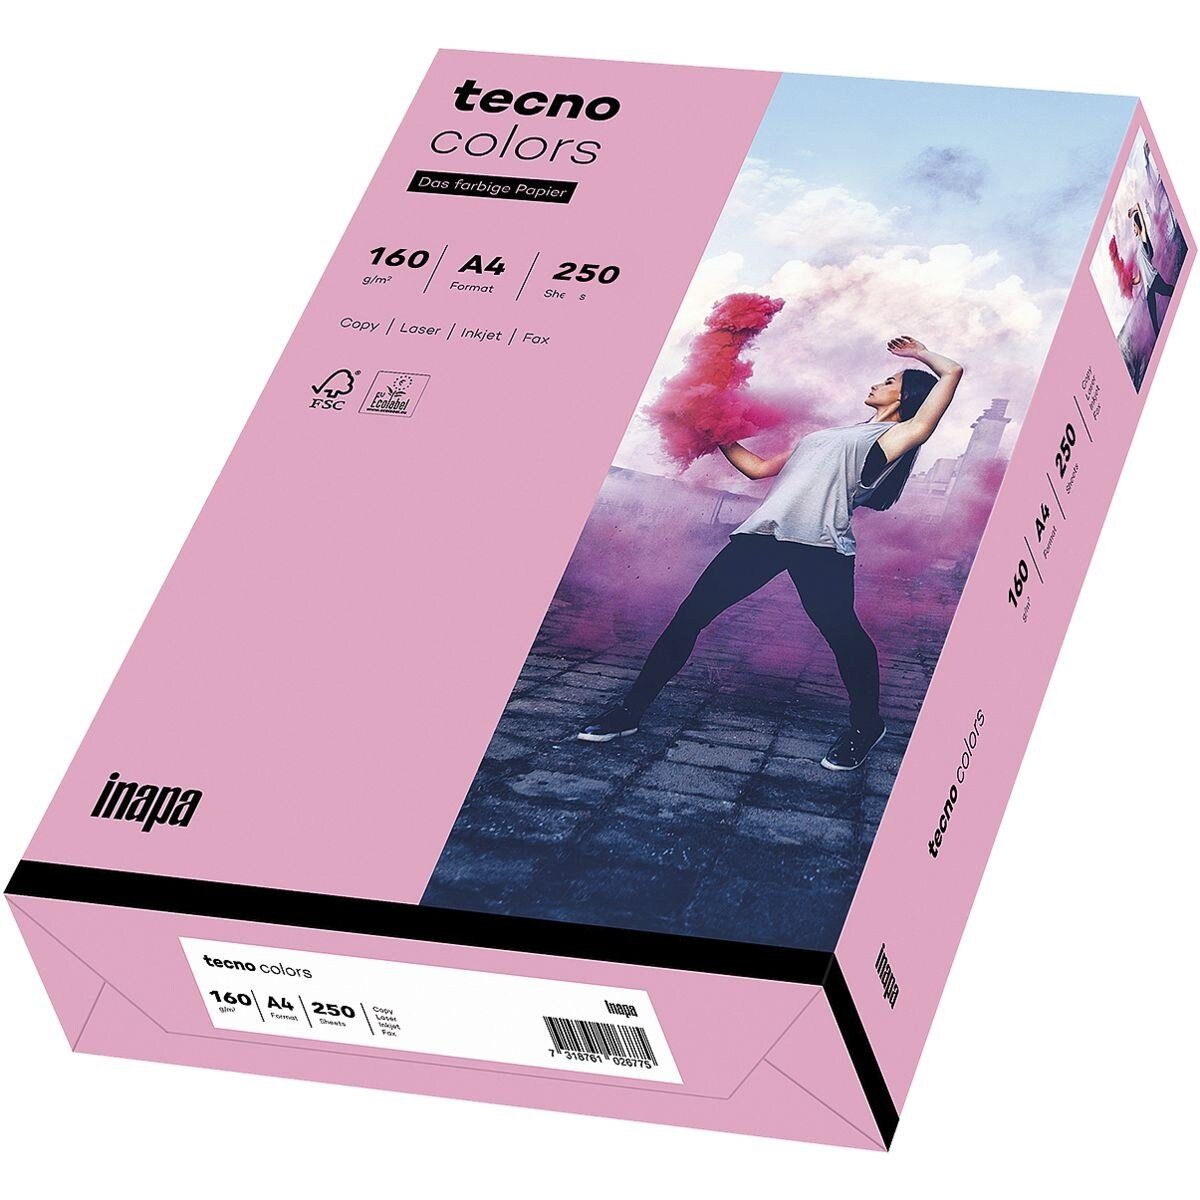 A4, Rainbow 250 / DIN Kopierpapier tecno 160 tecno rosa und Pastellfarben, g/m², Colors, Drucker- Inapa Blatt Format